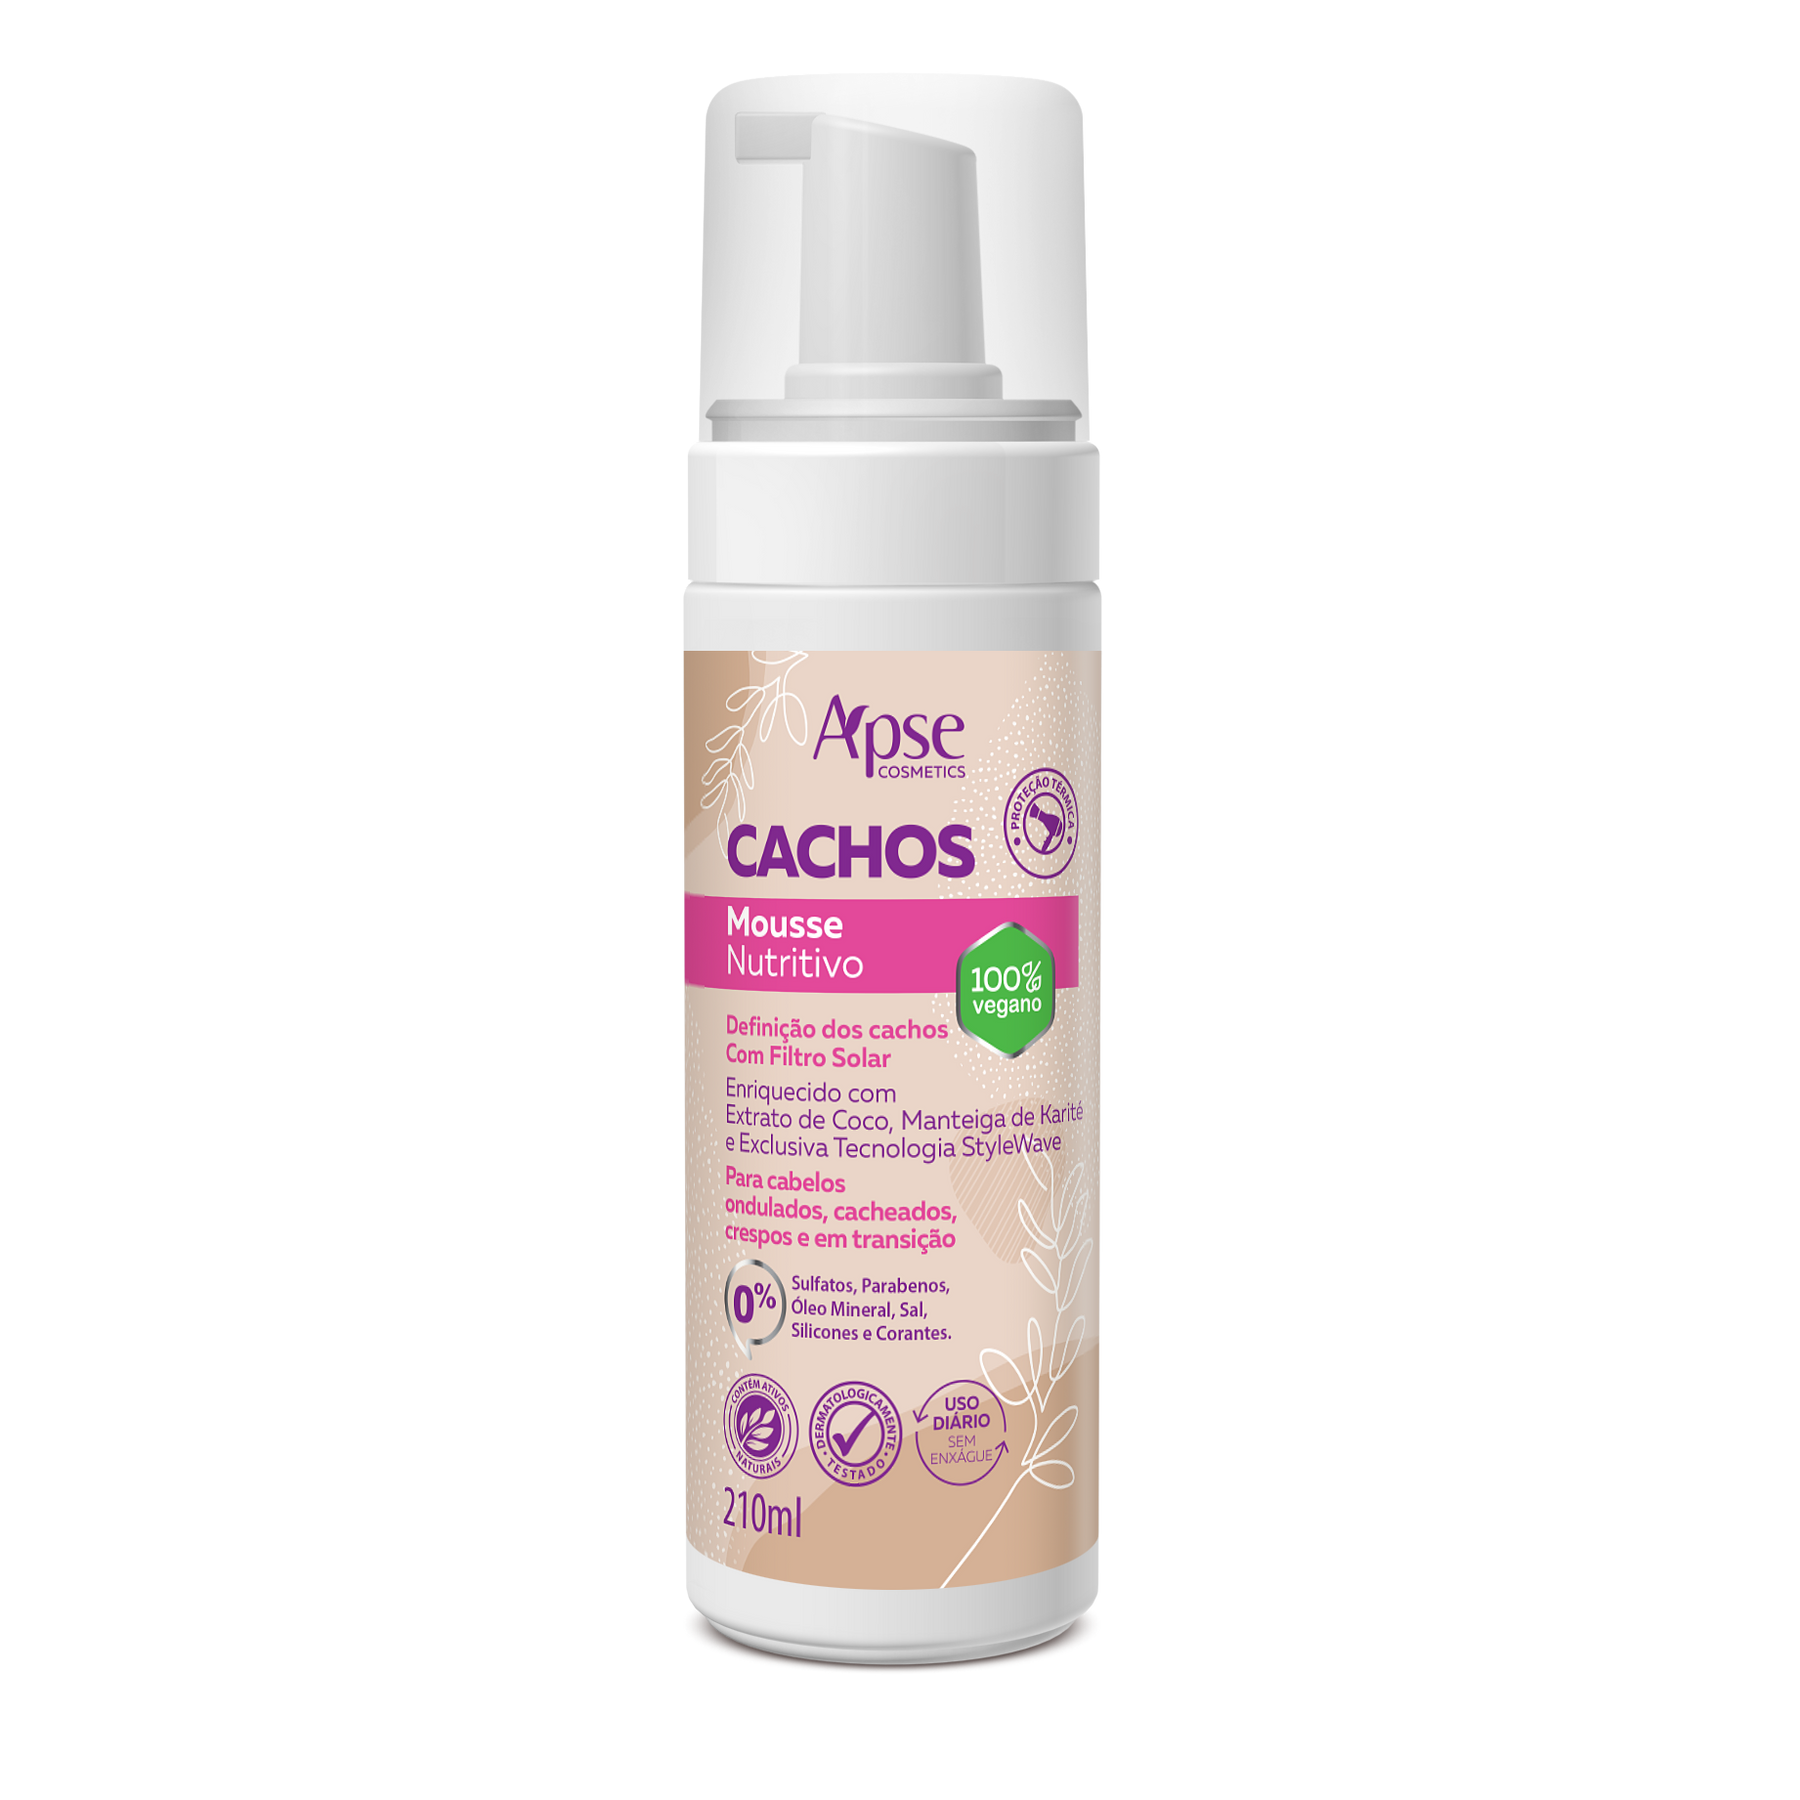 Apse Cosmetics Mousses Apse Cosmetics - Nourishing Curl Mousse 7.1 fl oz - Low Poo - Conditioning Action